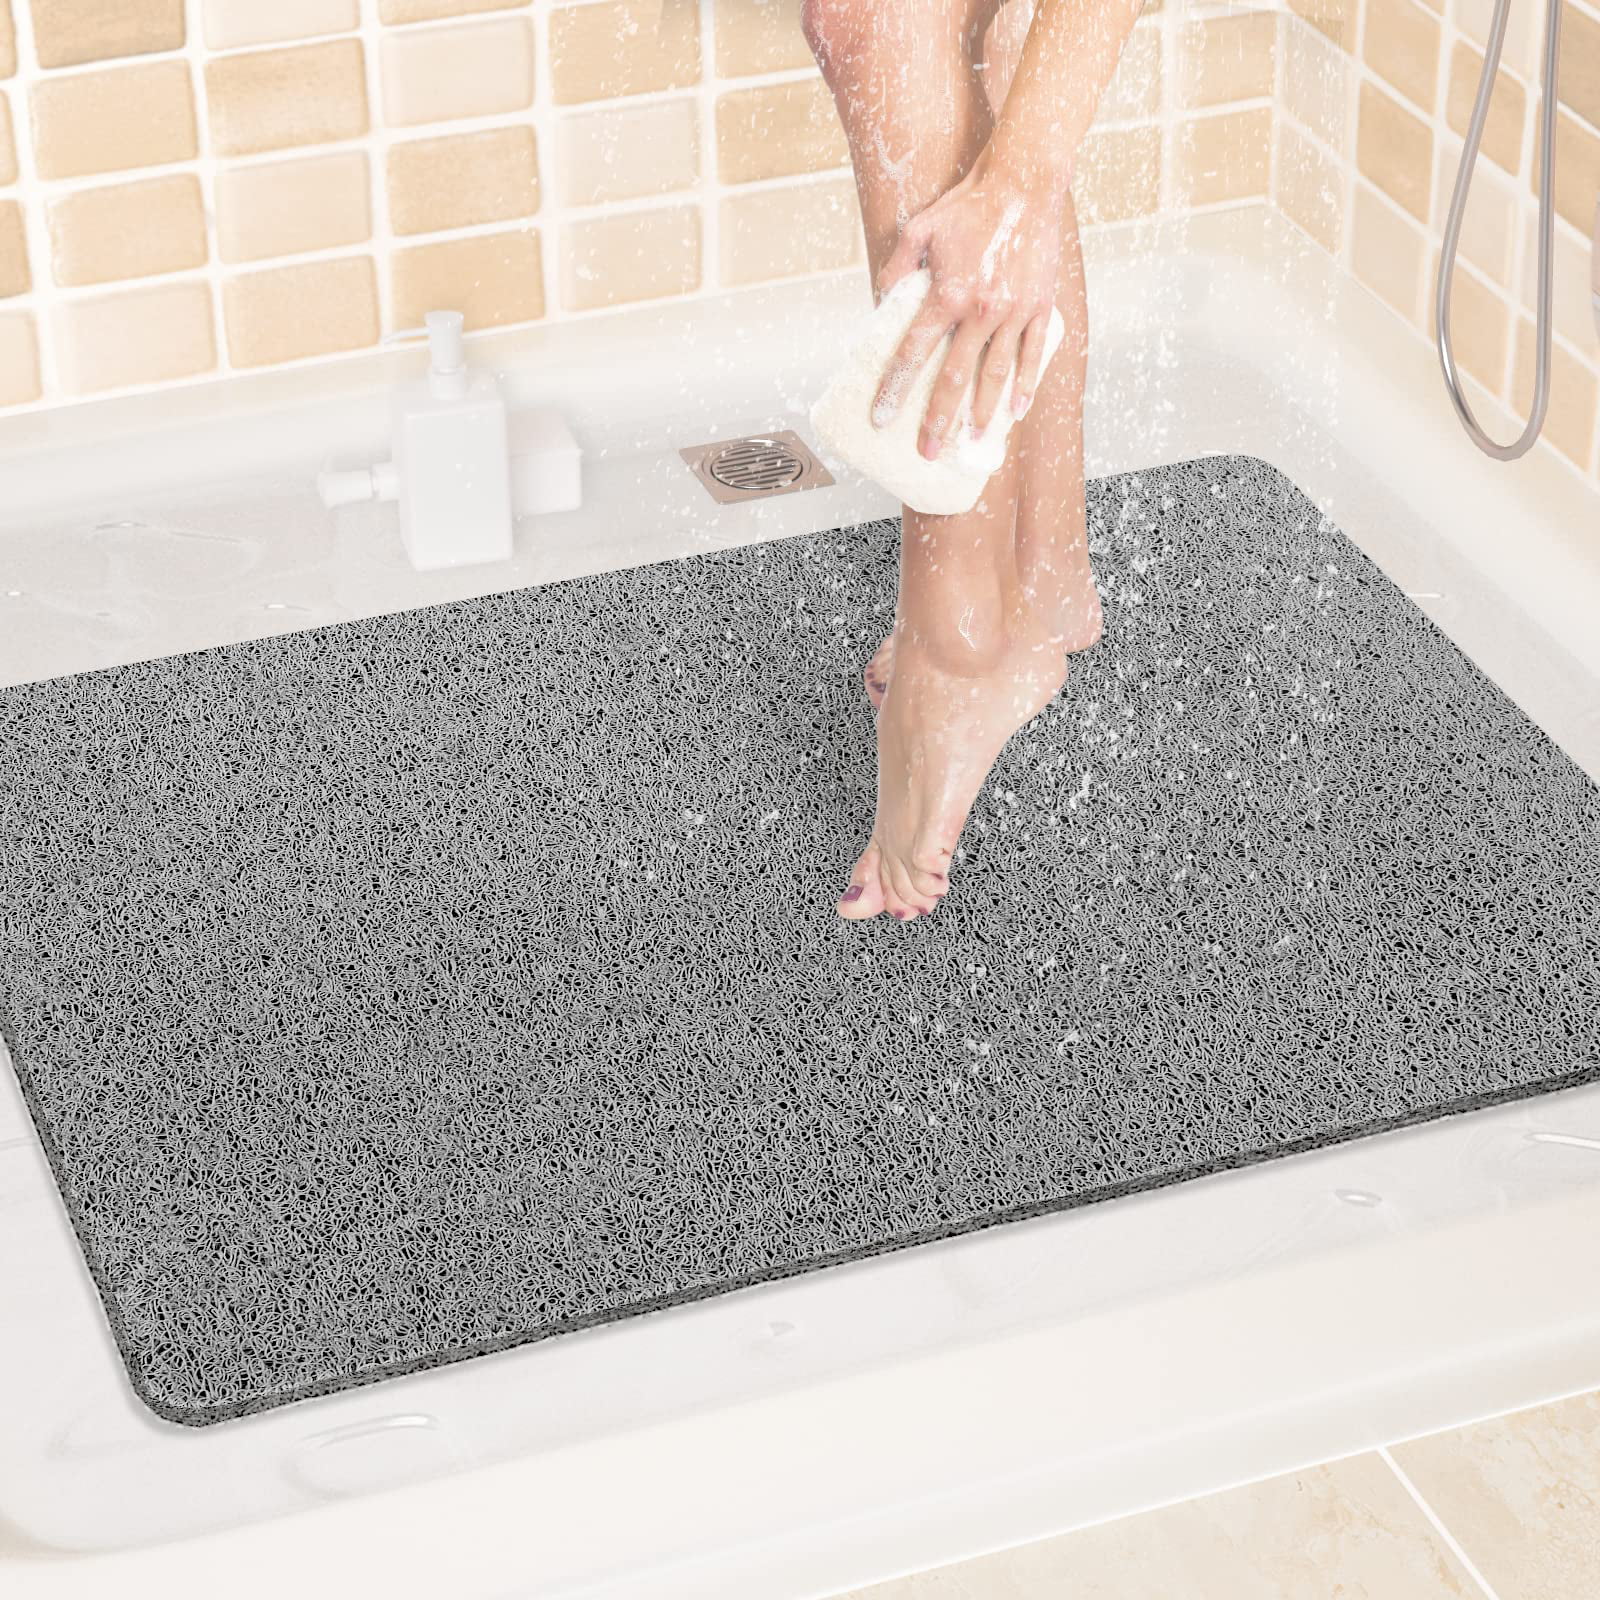 Non-Slip Bathtub Mat, 24x 16 inch, Shower Mats for Bath Tub, PVC Loofah  Bathroom Mats for Wet Areas, Quick Drying, Gray color